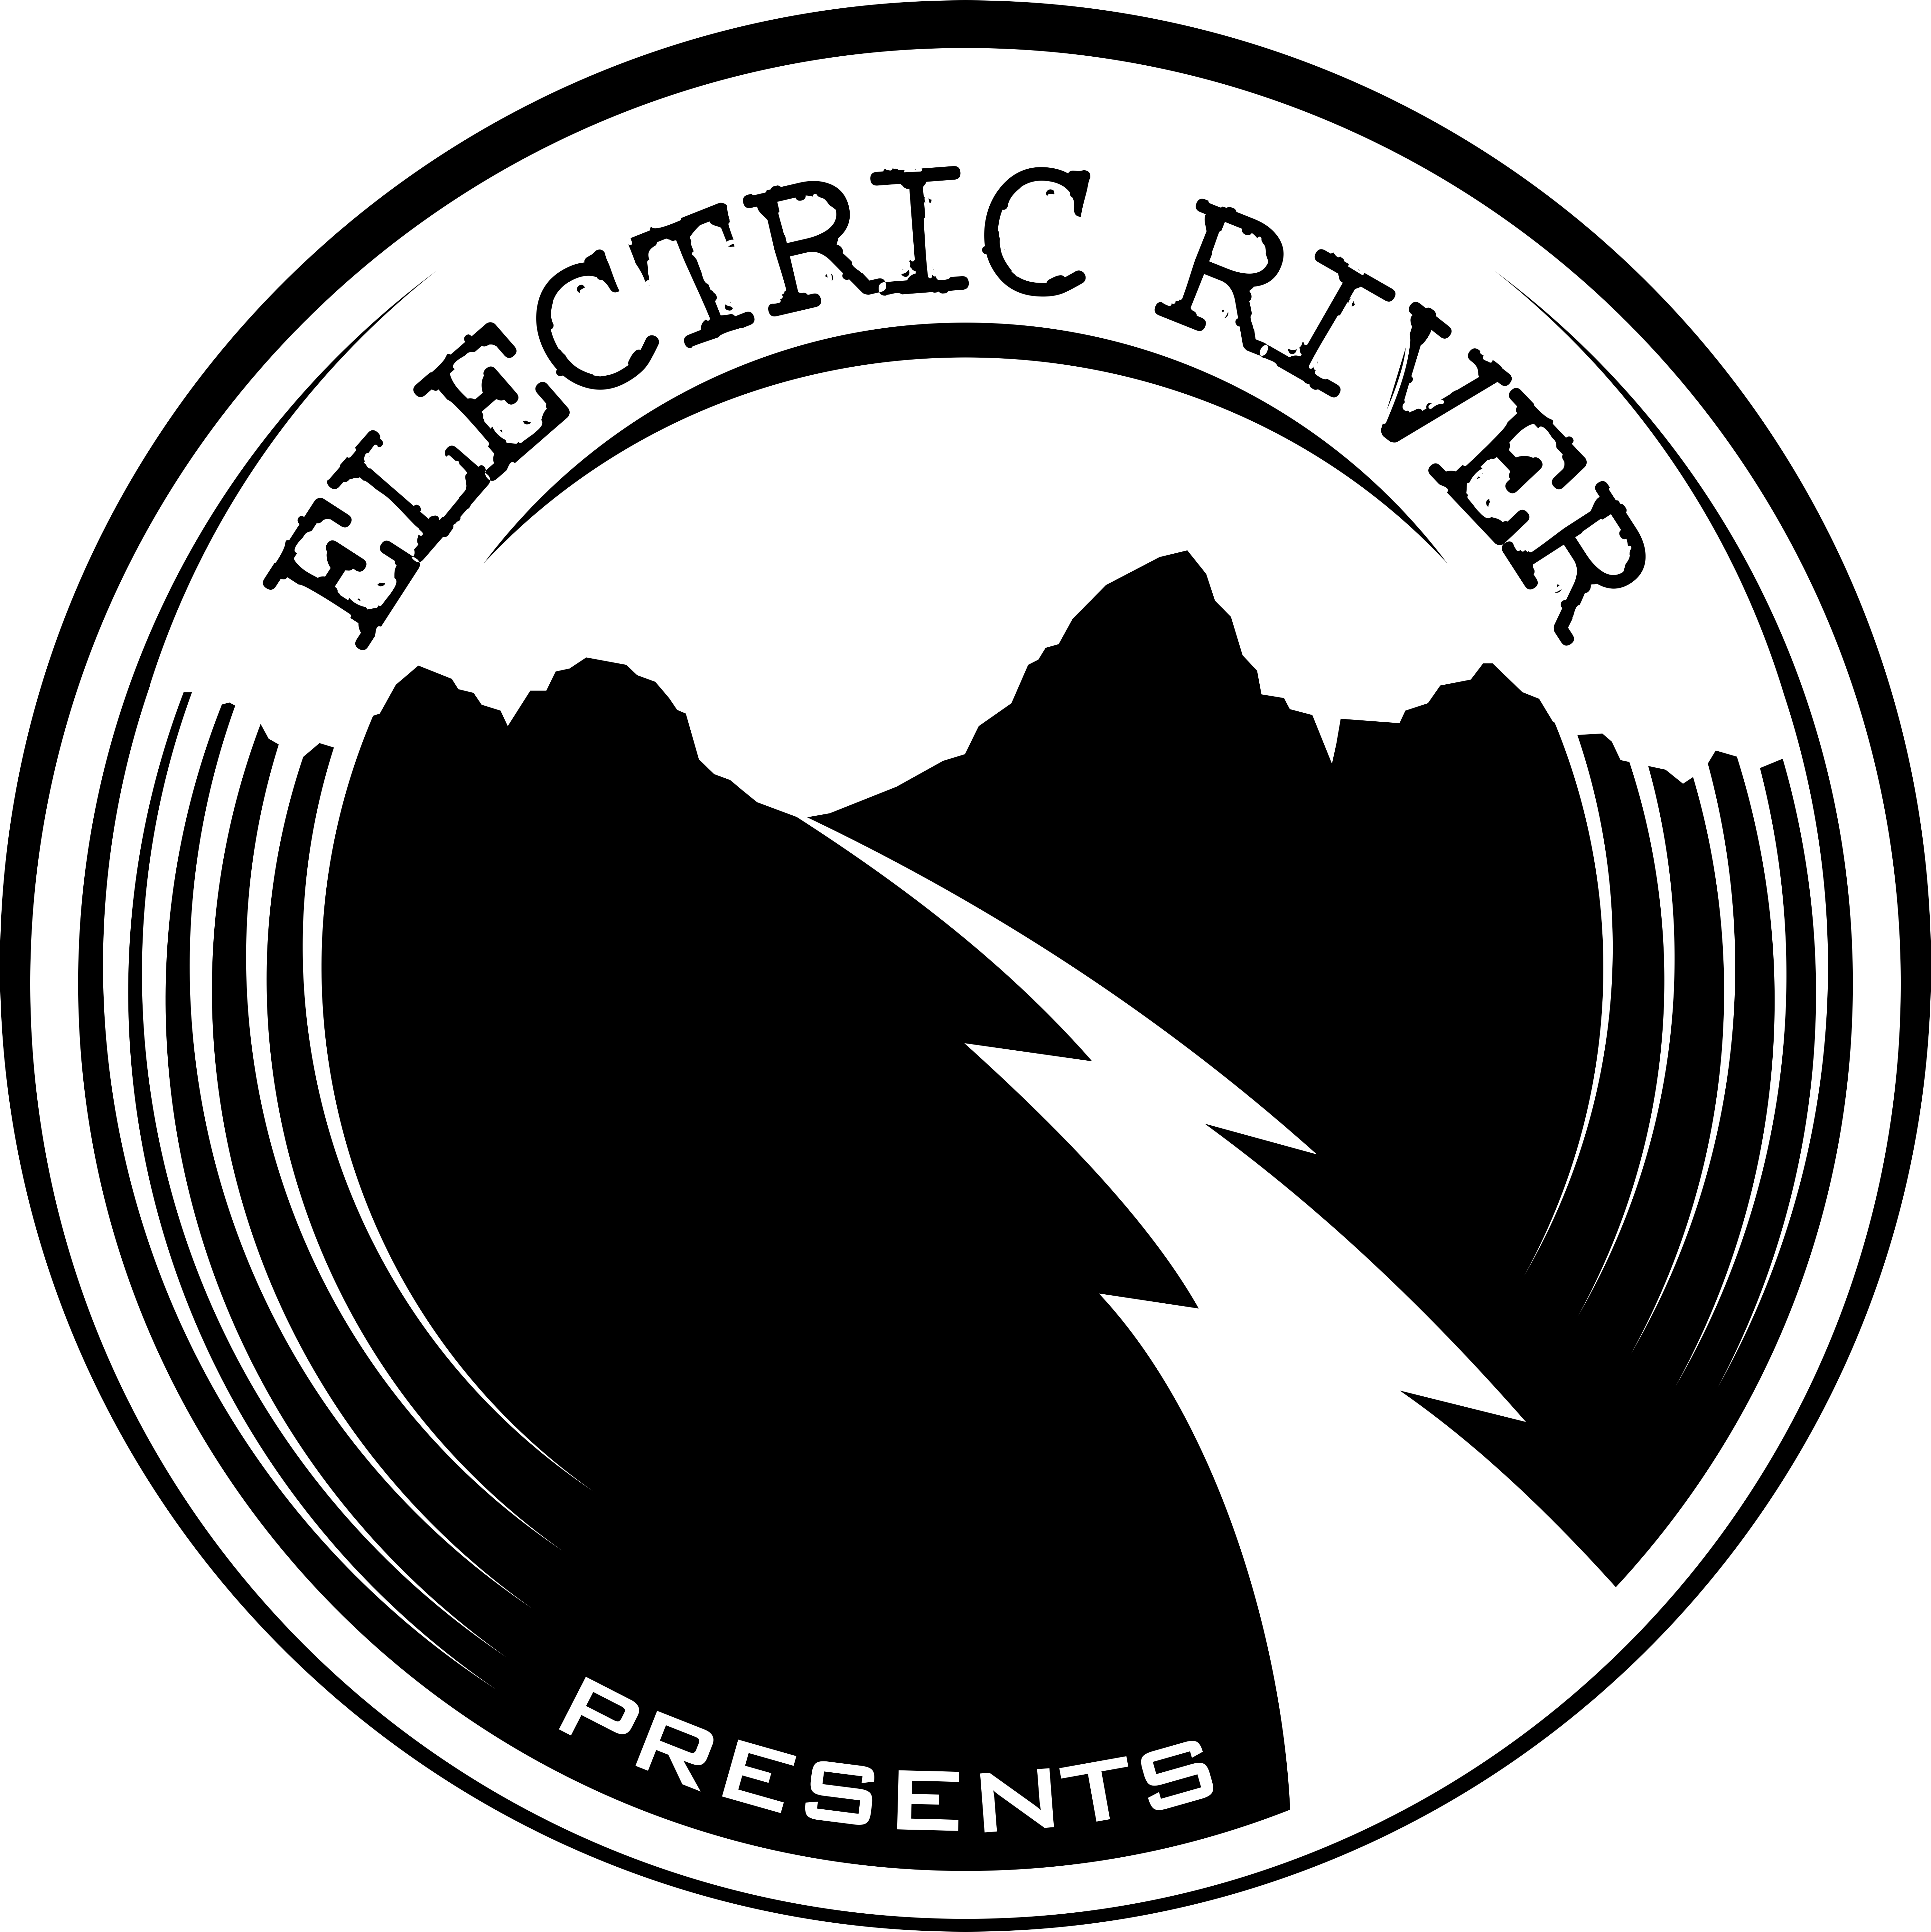 Electric River Presents